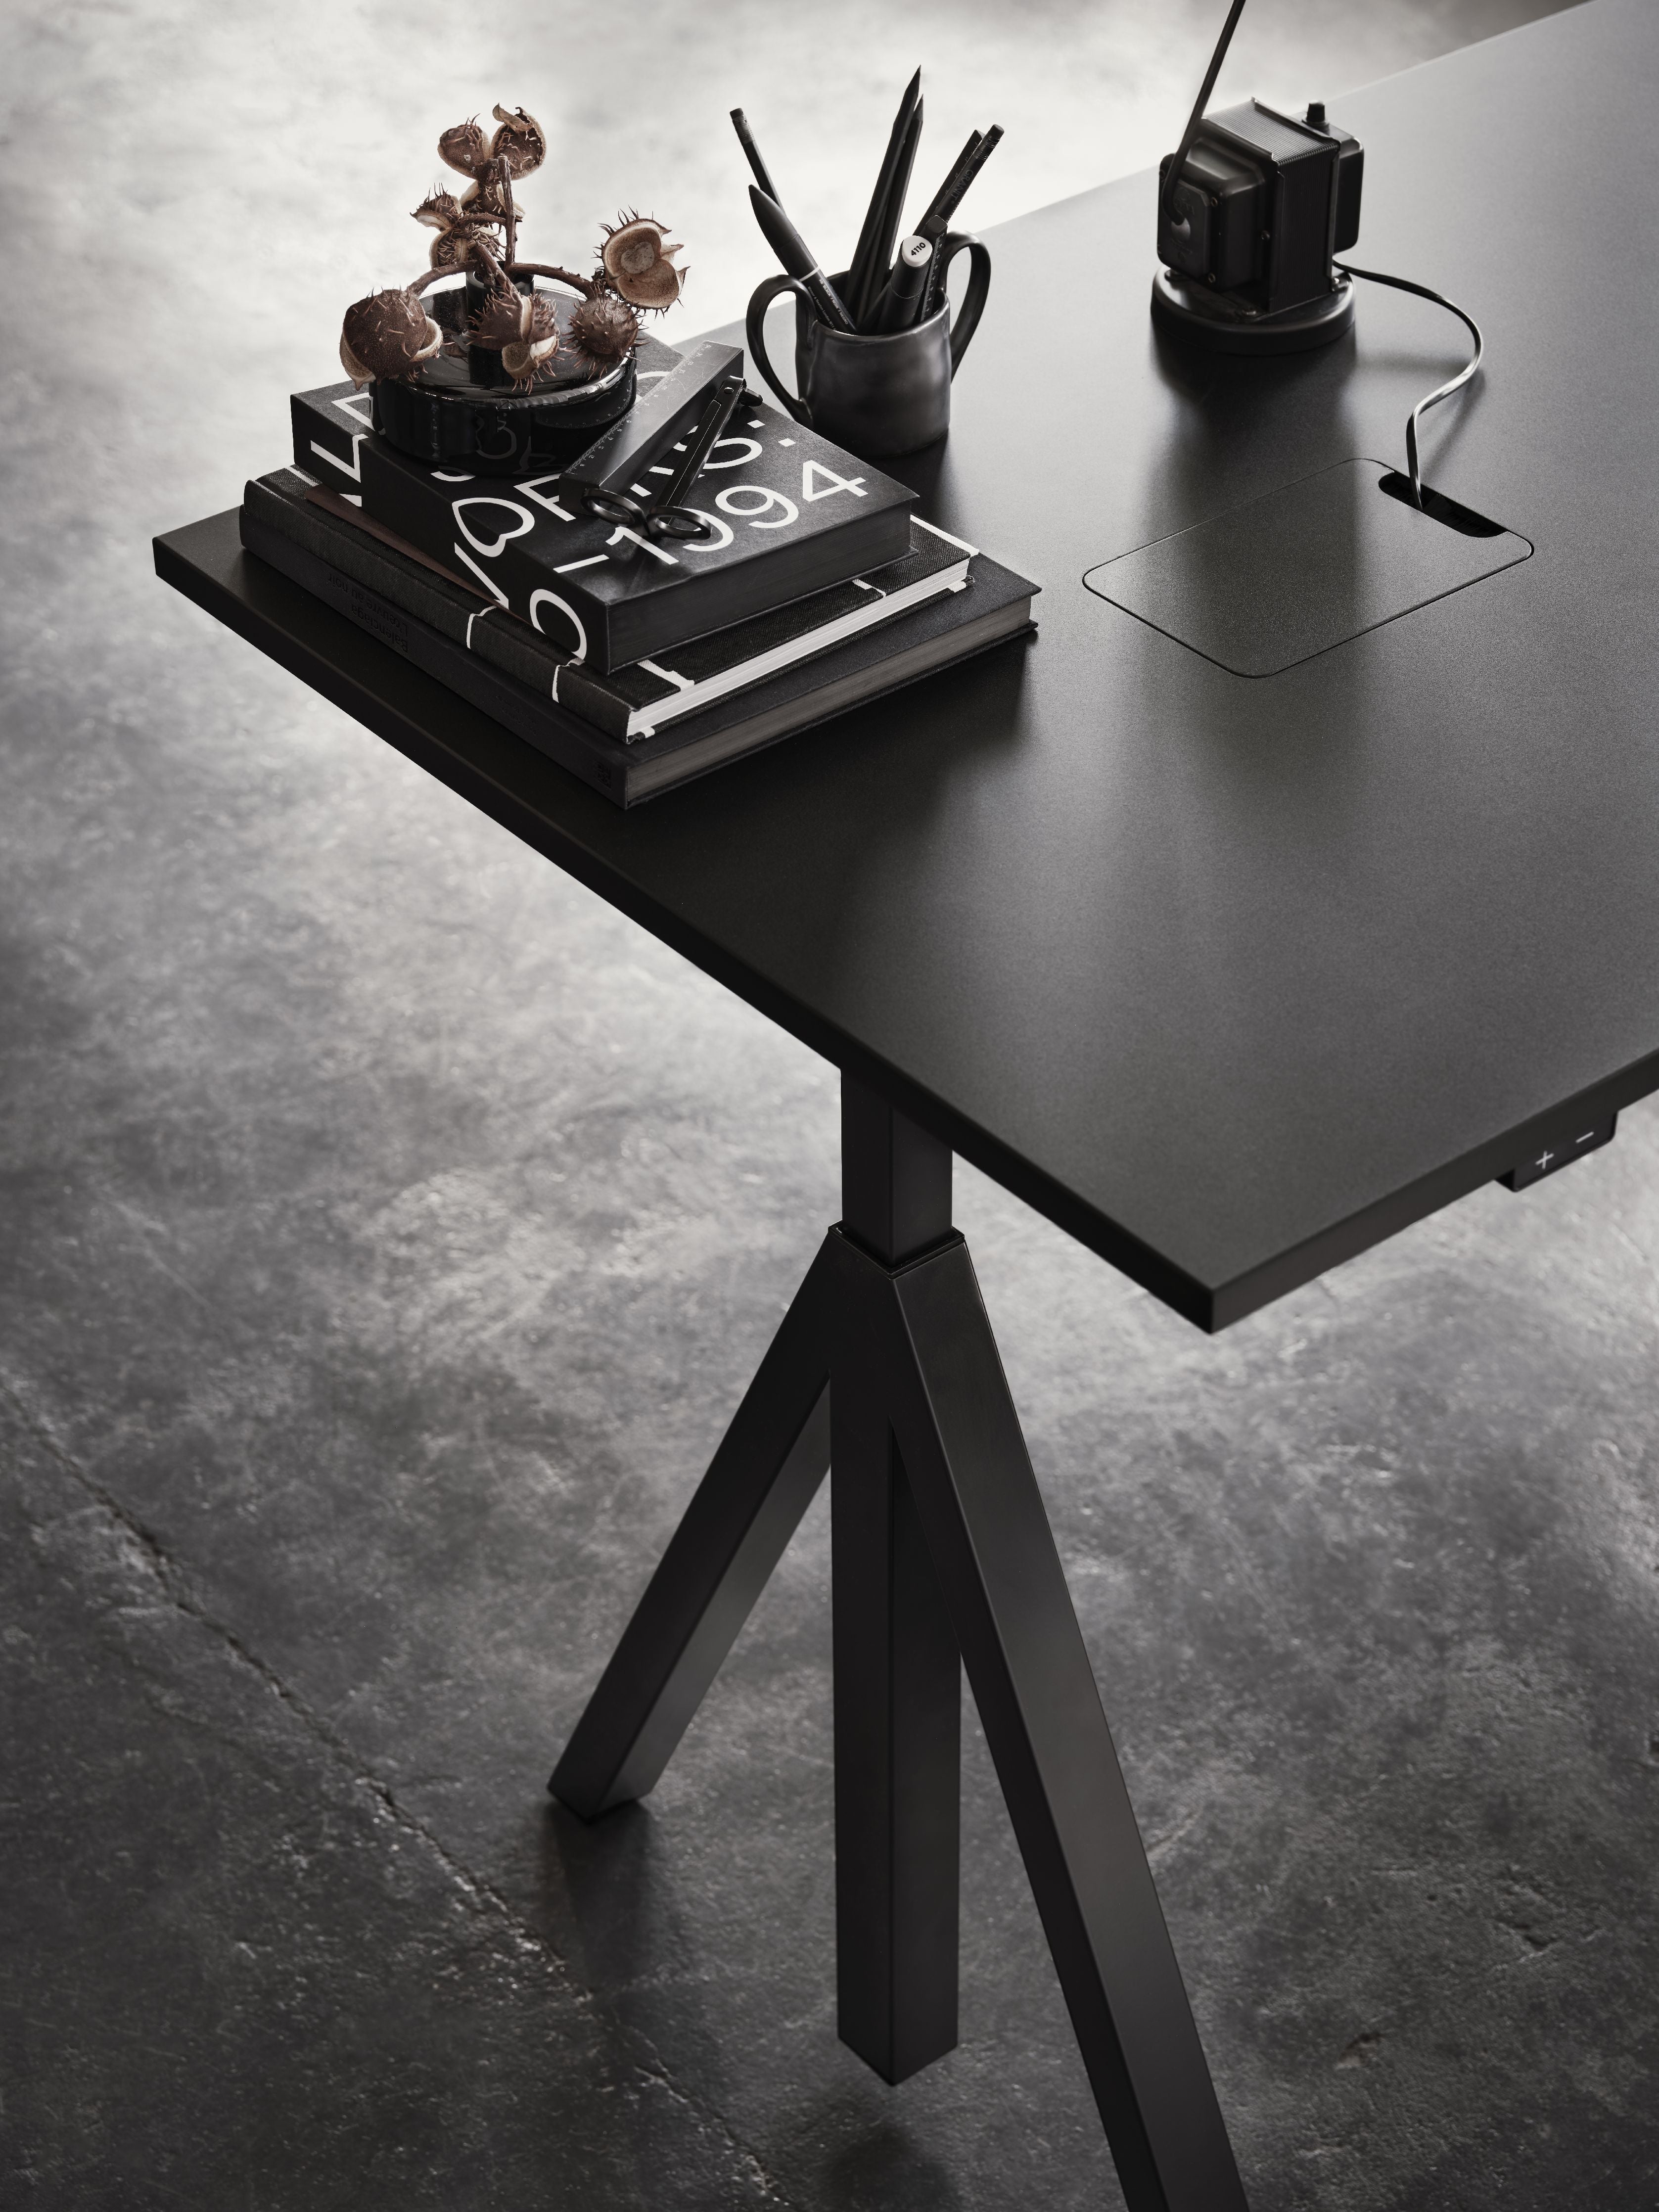 String Furniture Height Adjustable Work Table 78x140 Cm, Black/Black